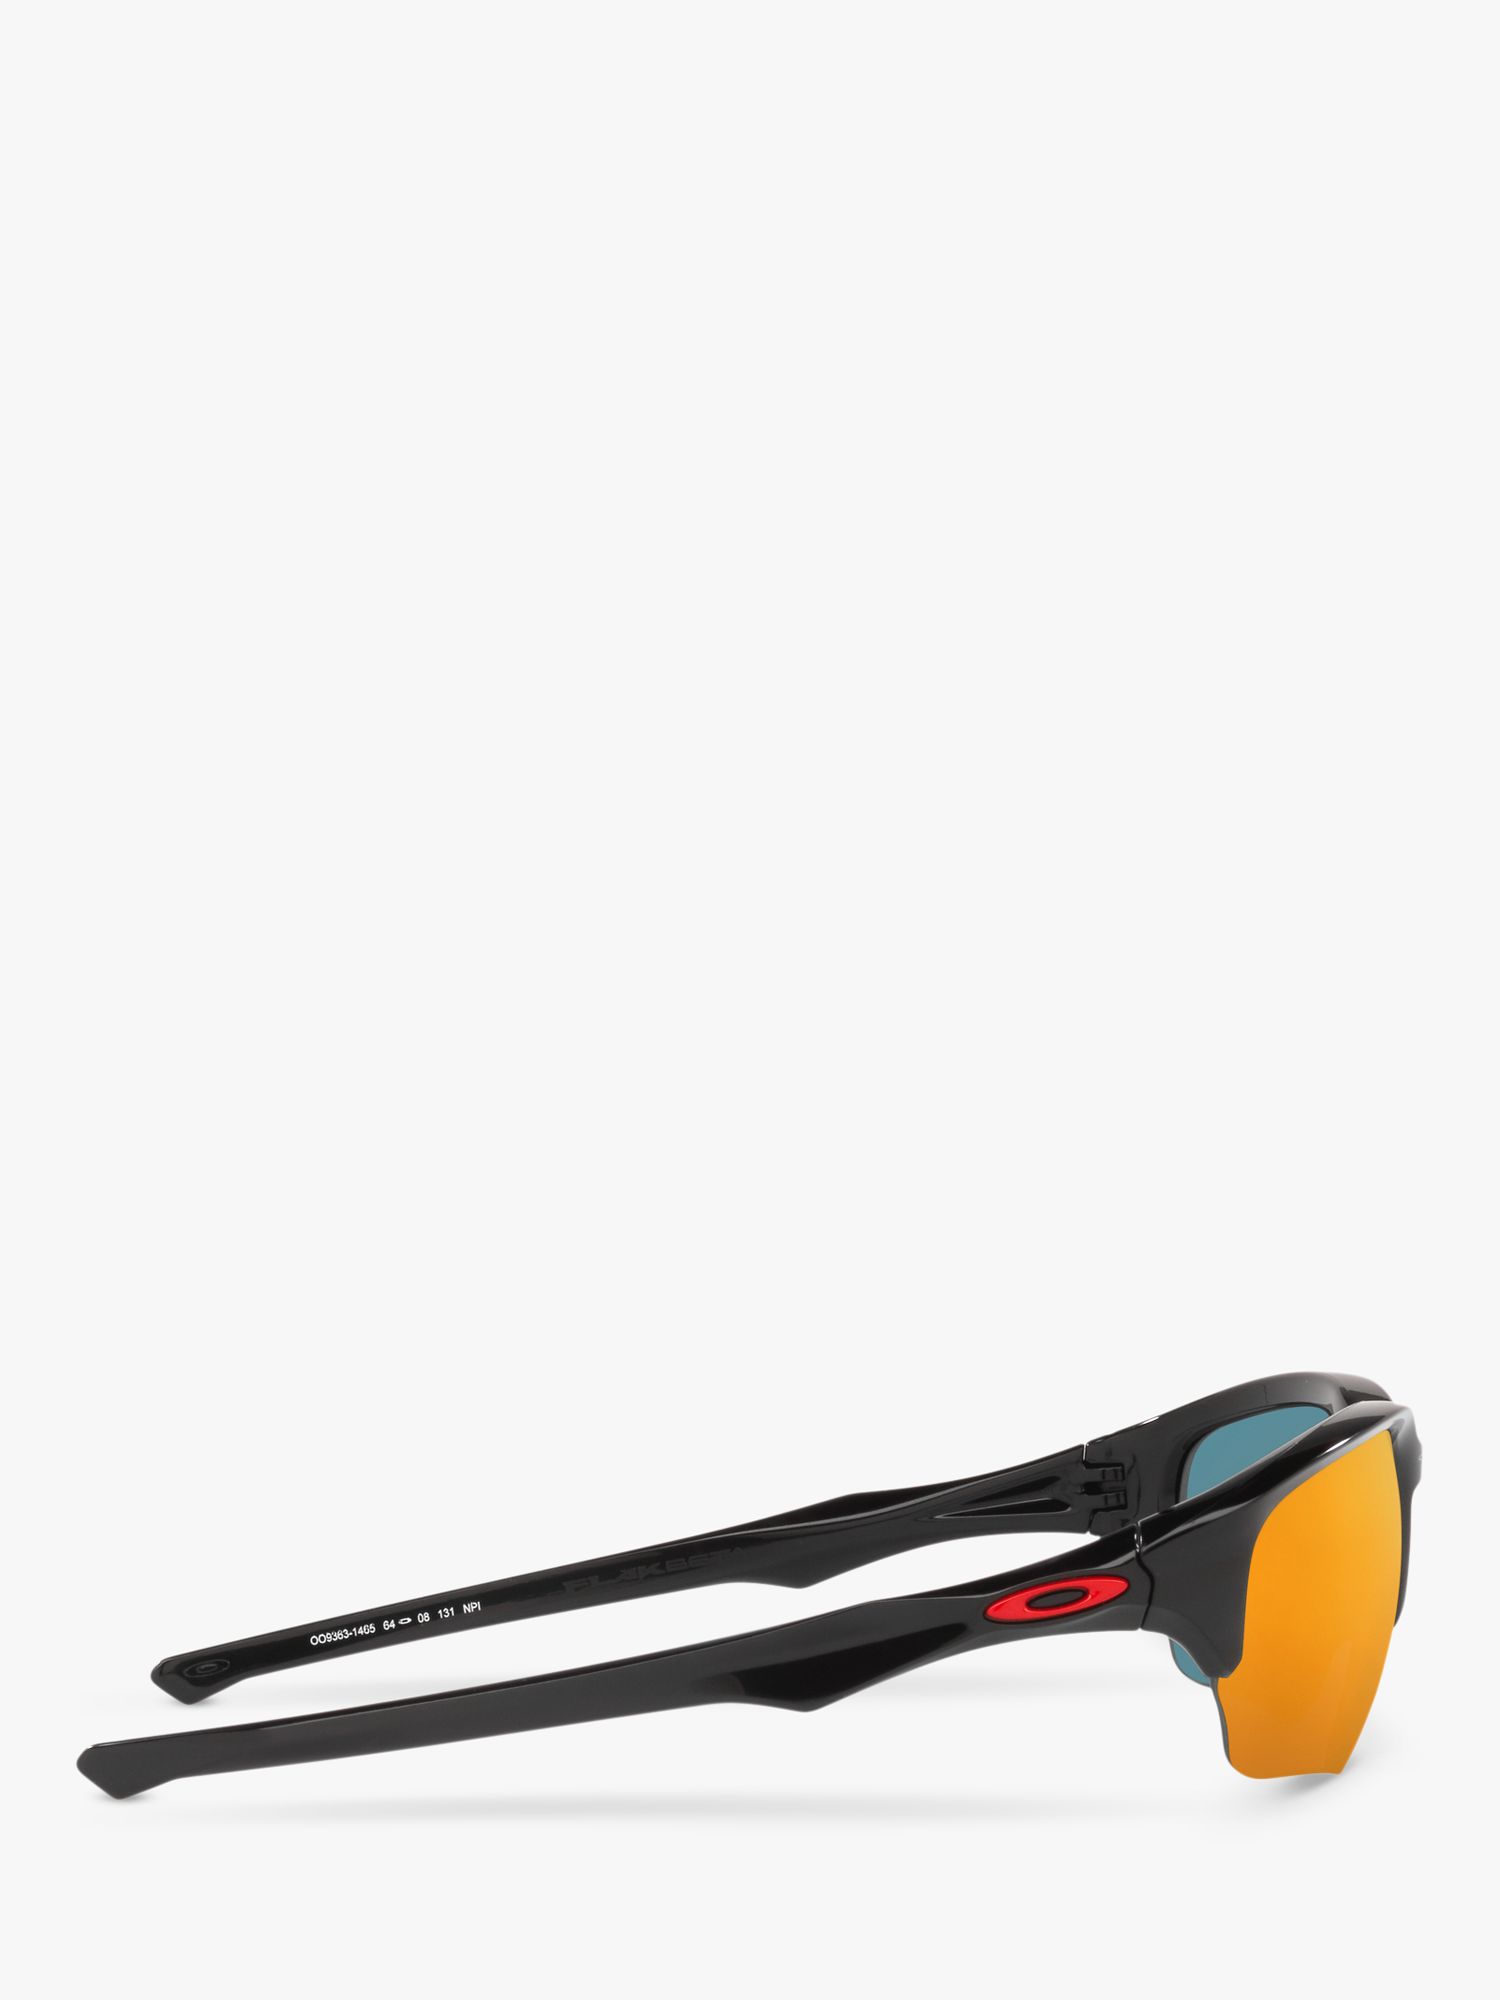 Oakley OO9363 Men's Flak Beta Polarised Rectangular Sunglasses, Polished Black/Orange